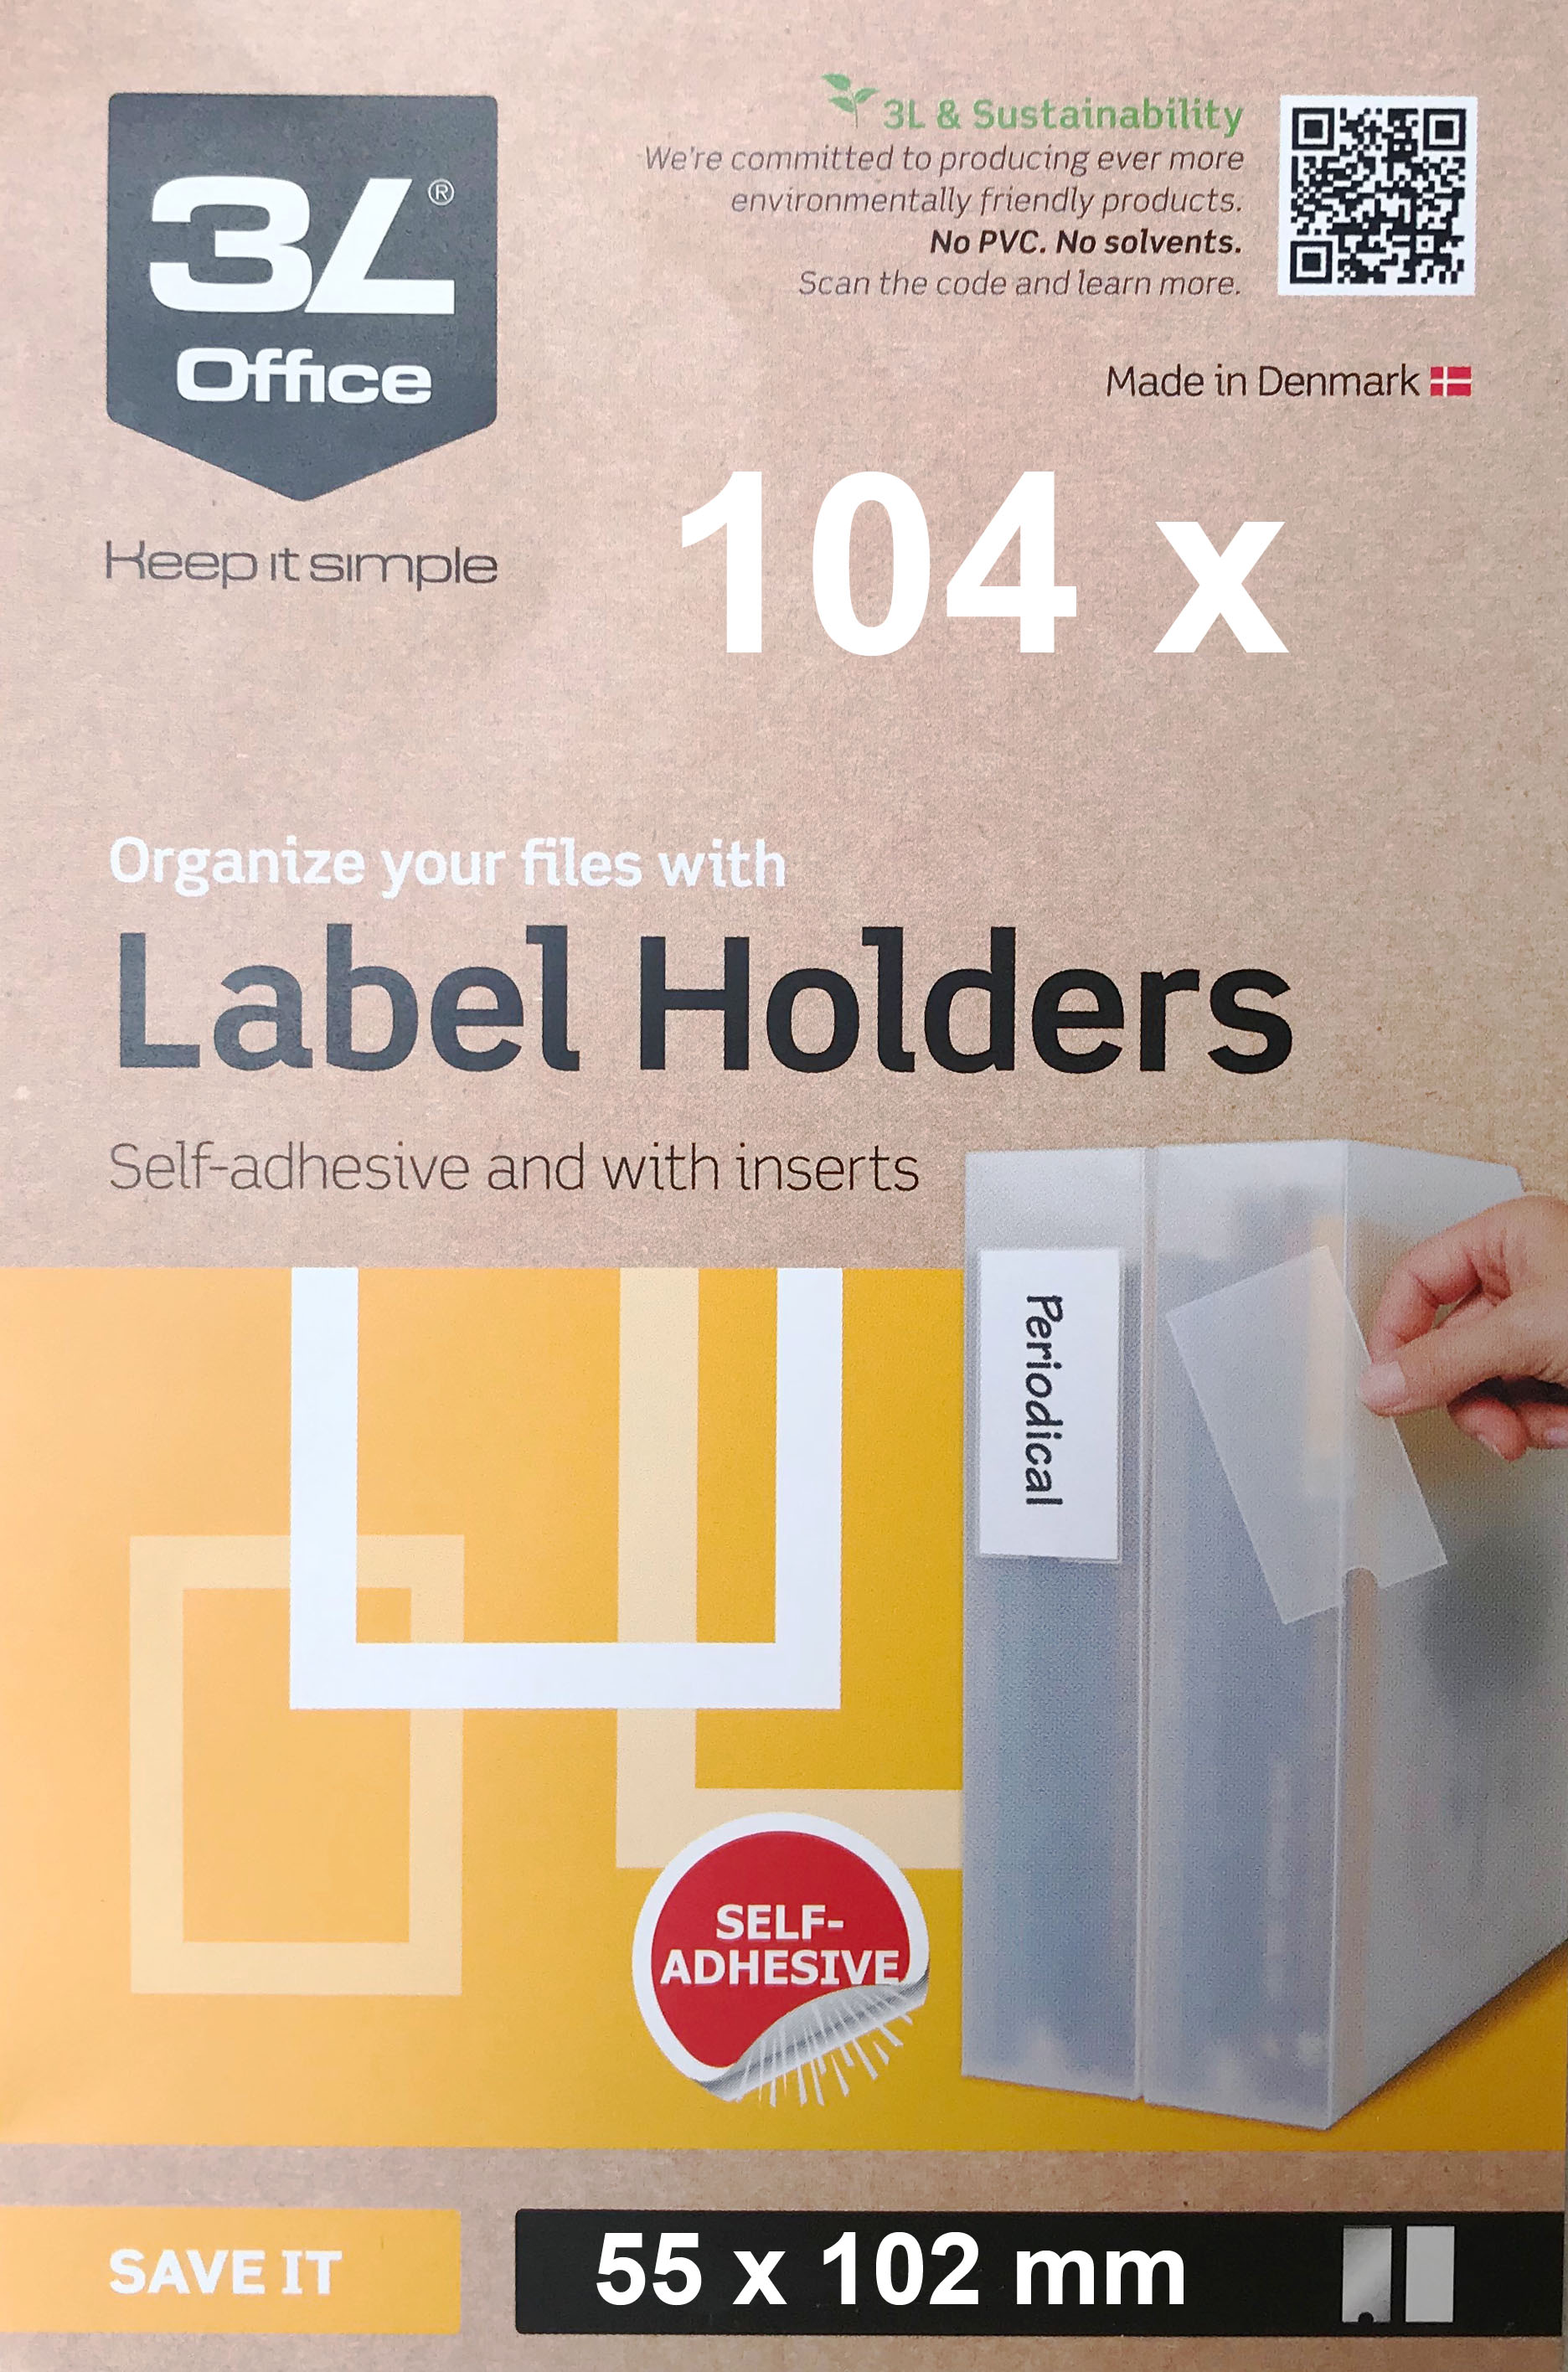 3L Label holders - 55 x 102 mm